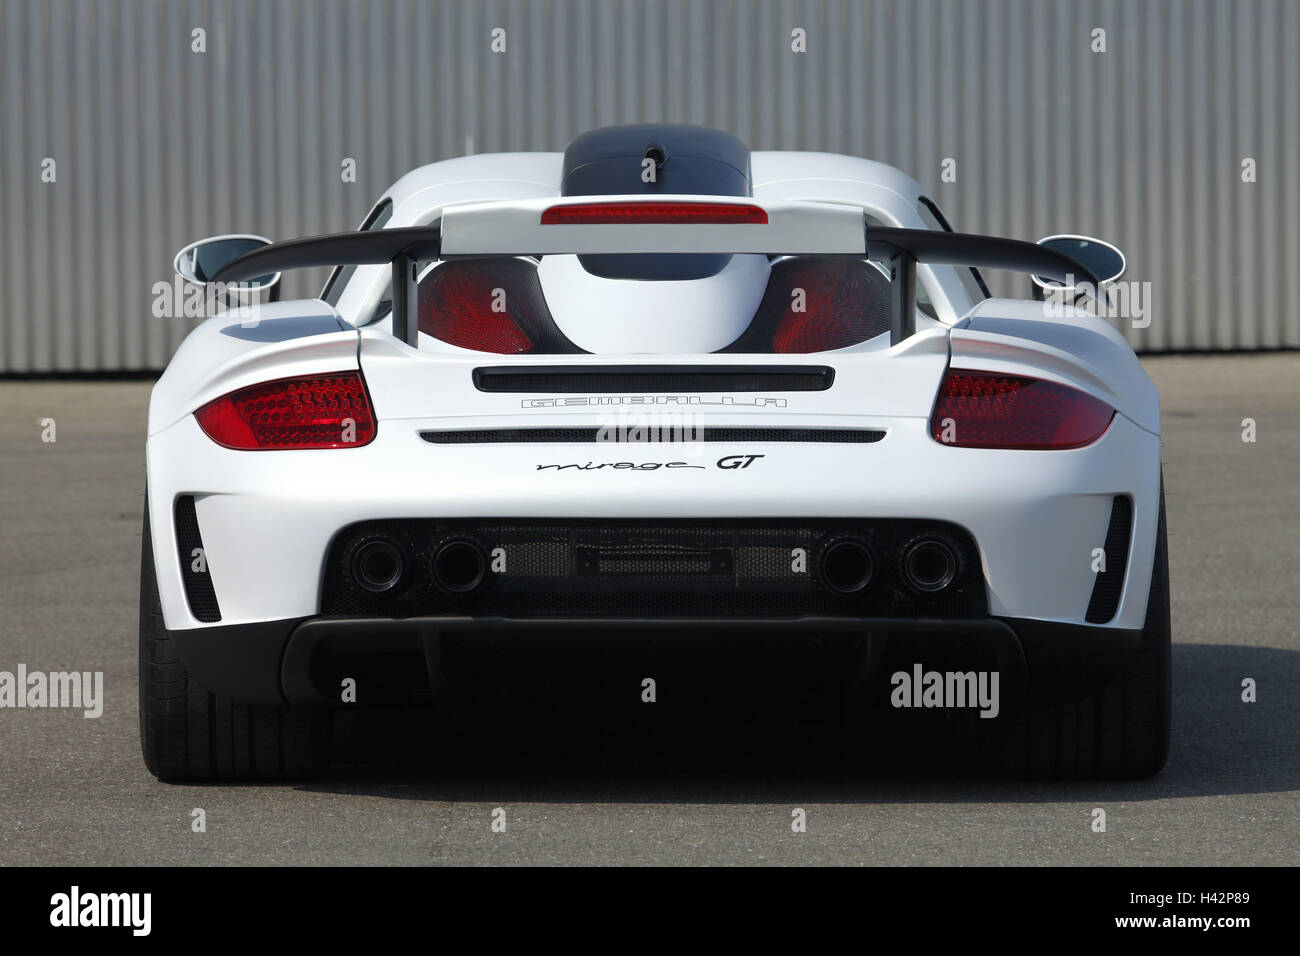 Porsche, Gemballa Mirage GT white, rear, no property release, Stock Photo